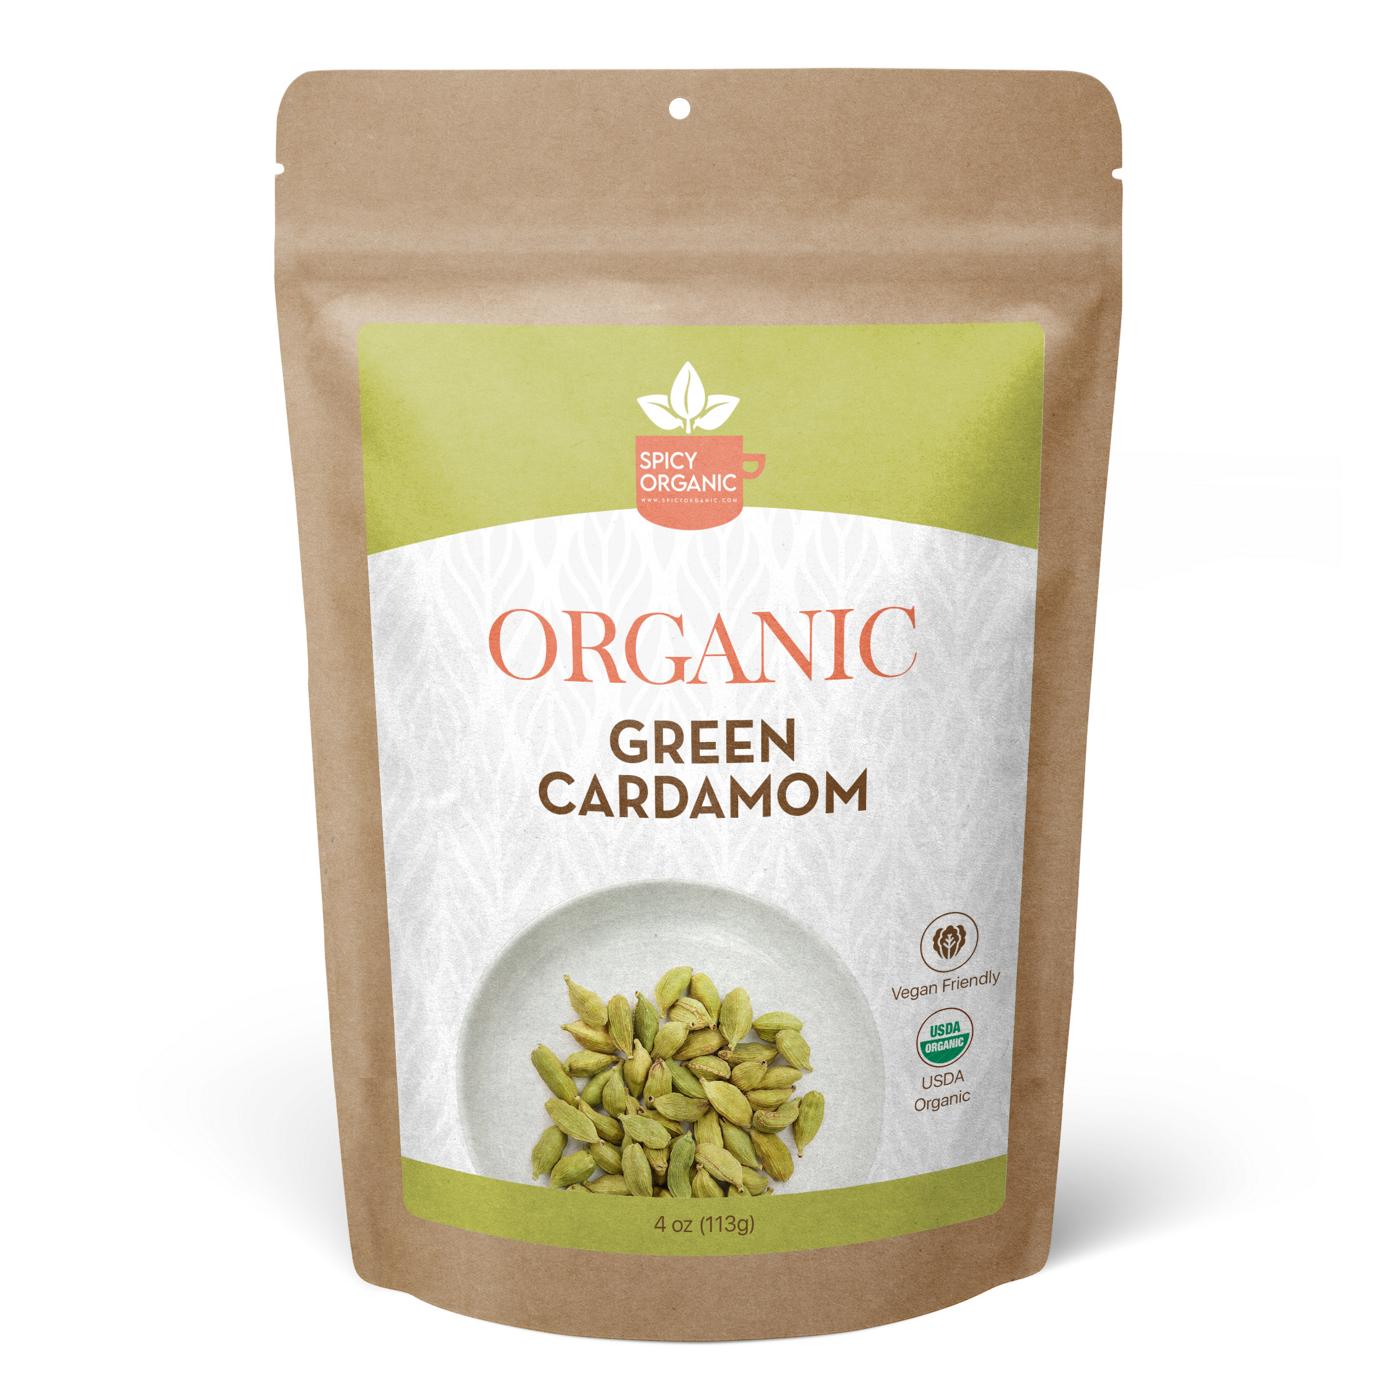 Spicy Organic Green Cardamom; image 1 of 2